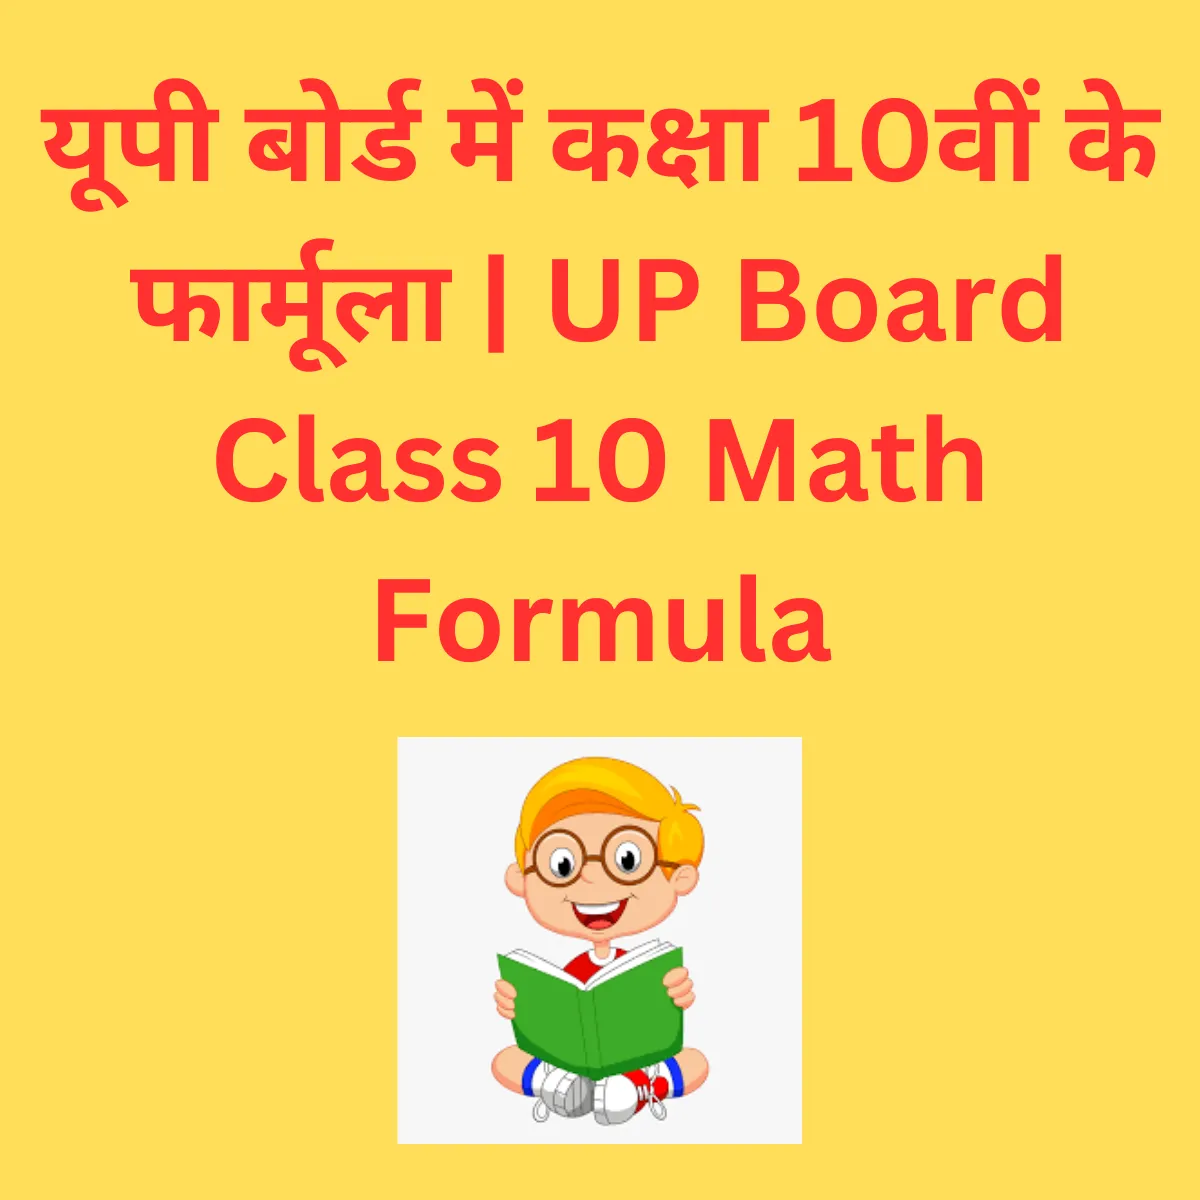 UP Board Class 10 Math Formula | यूपी बोर्ड में कक्षा 10वीं के फार्मूला